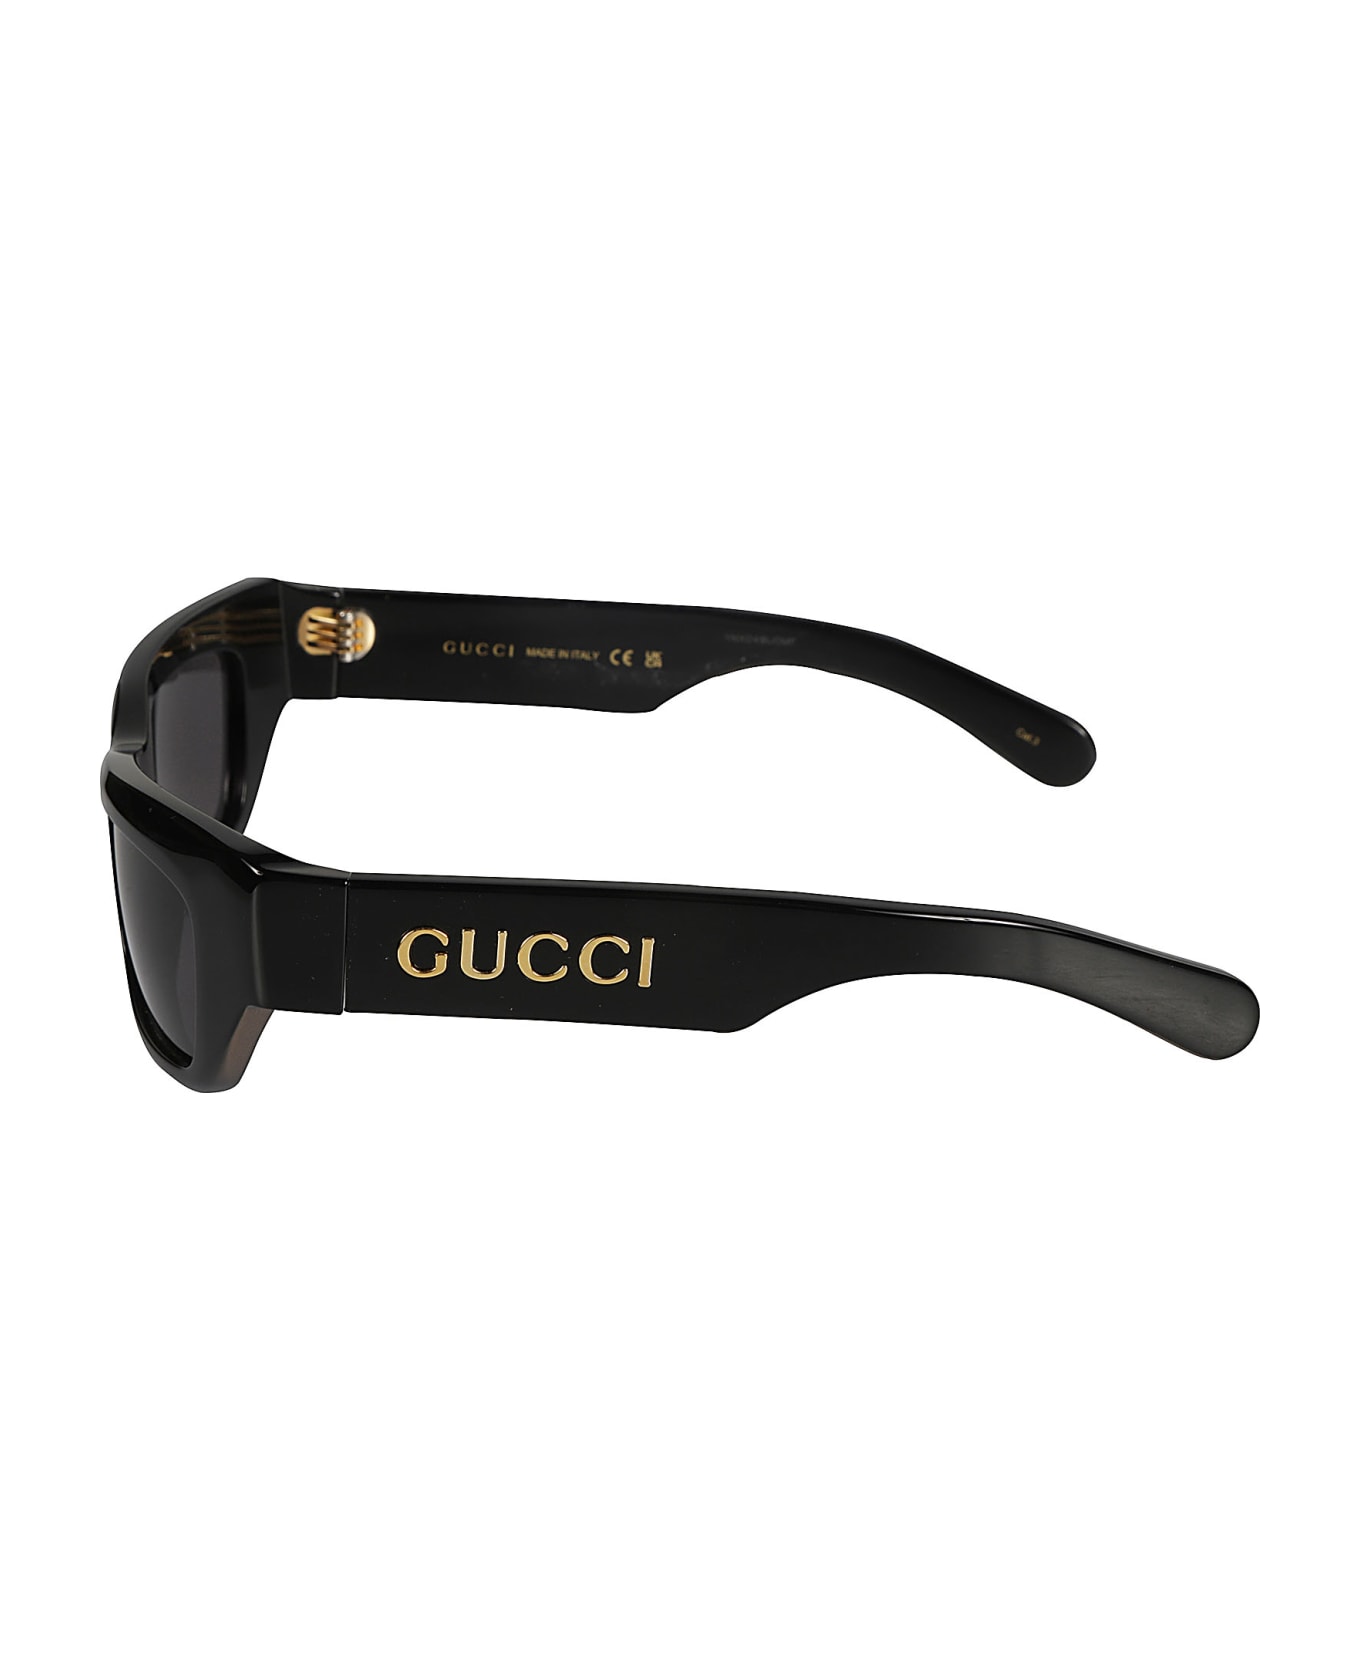 Gucci Eyewear Logo Sided Square Lens Sunglasses - Black/Grey